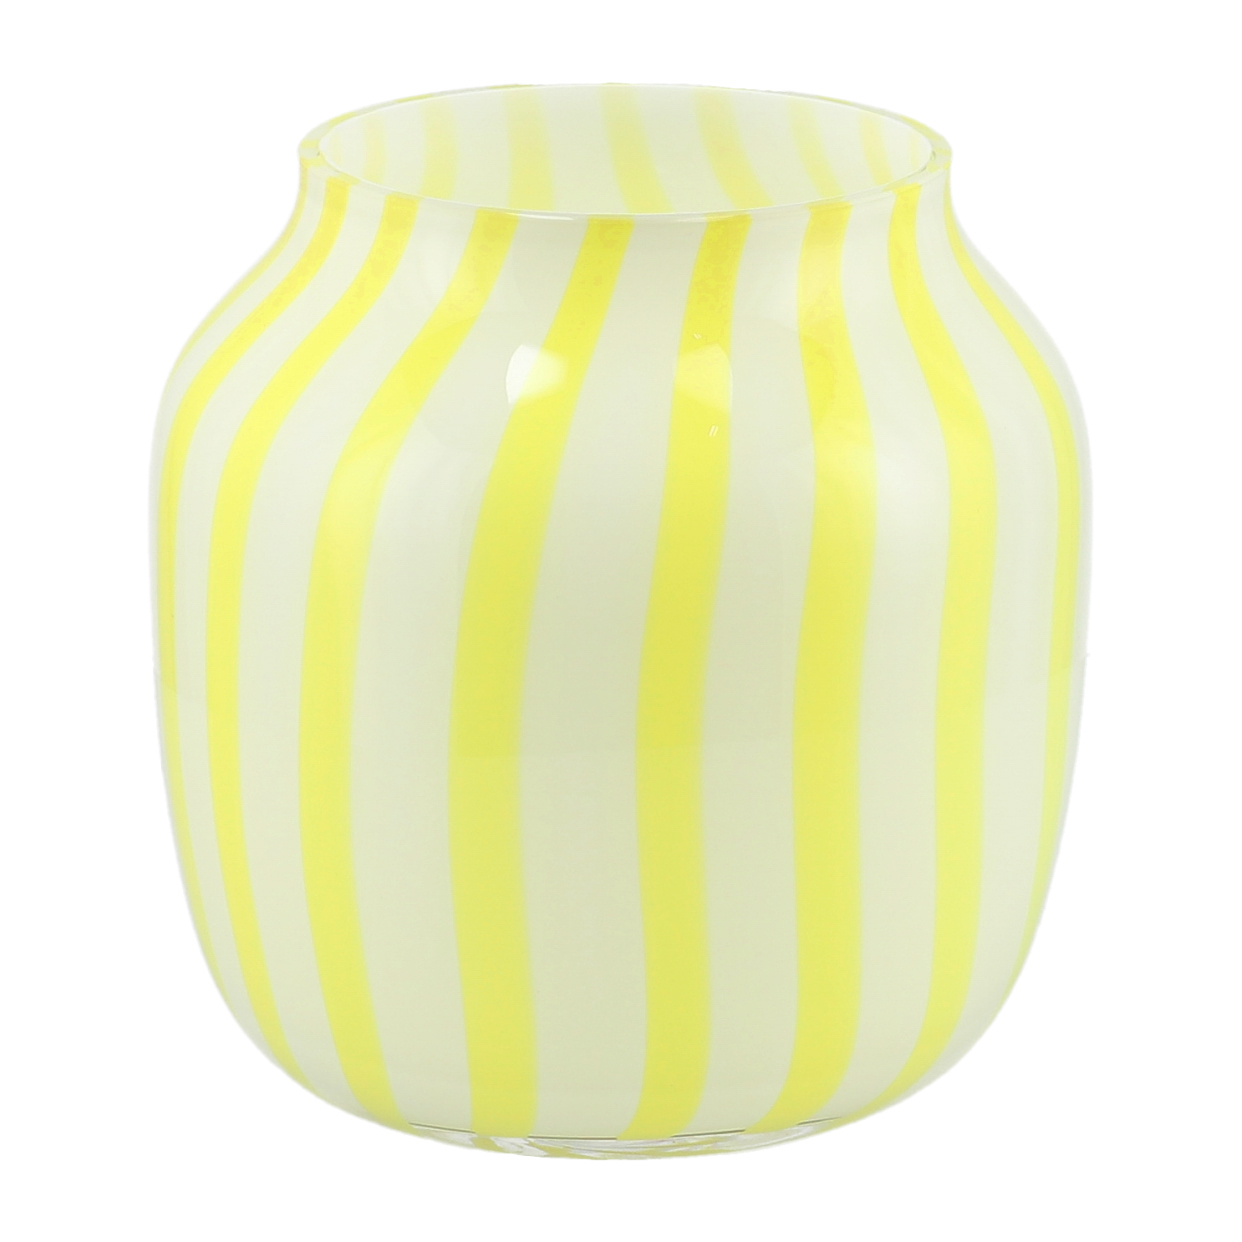 https://www.nordicnest.com/assets/blobs/hay-juice-wide-vase-22-cm-yellow/44569-01_1_ProductImageMain-0ab8f47b01.jpeg